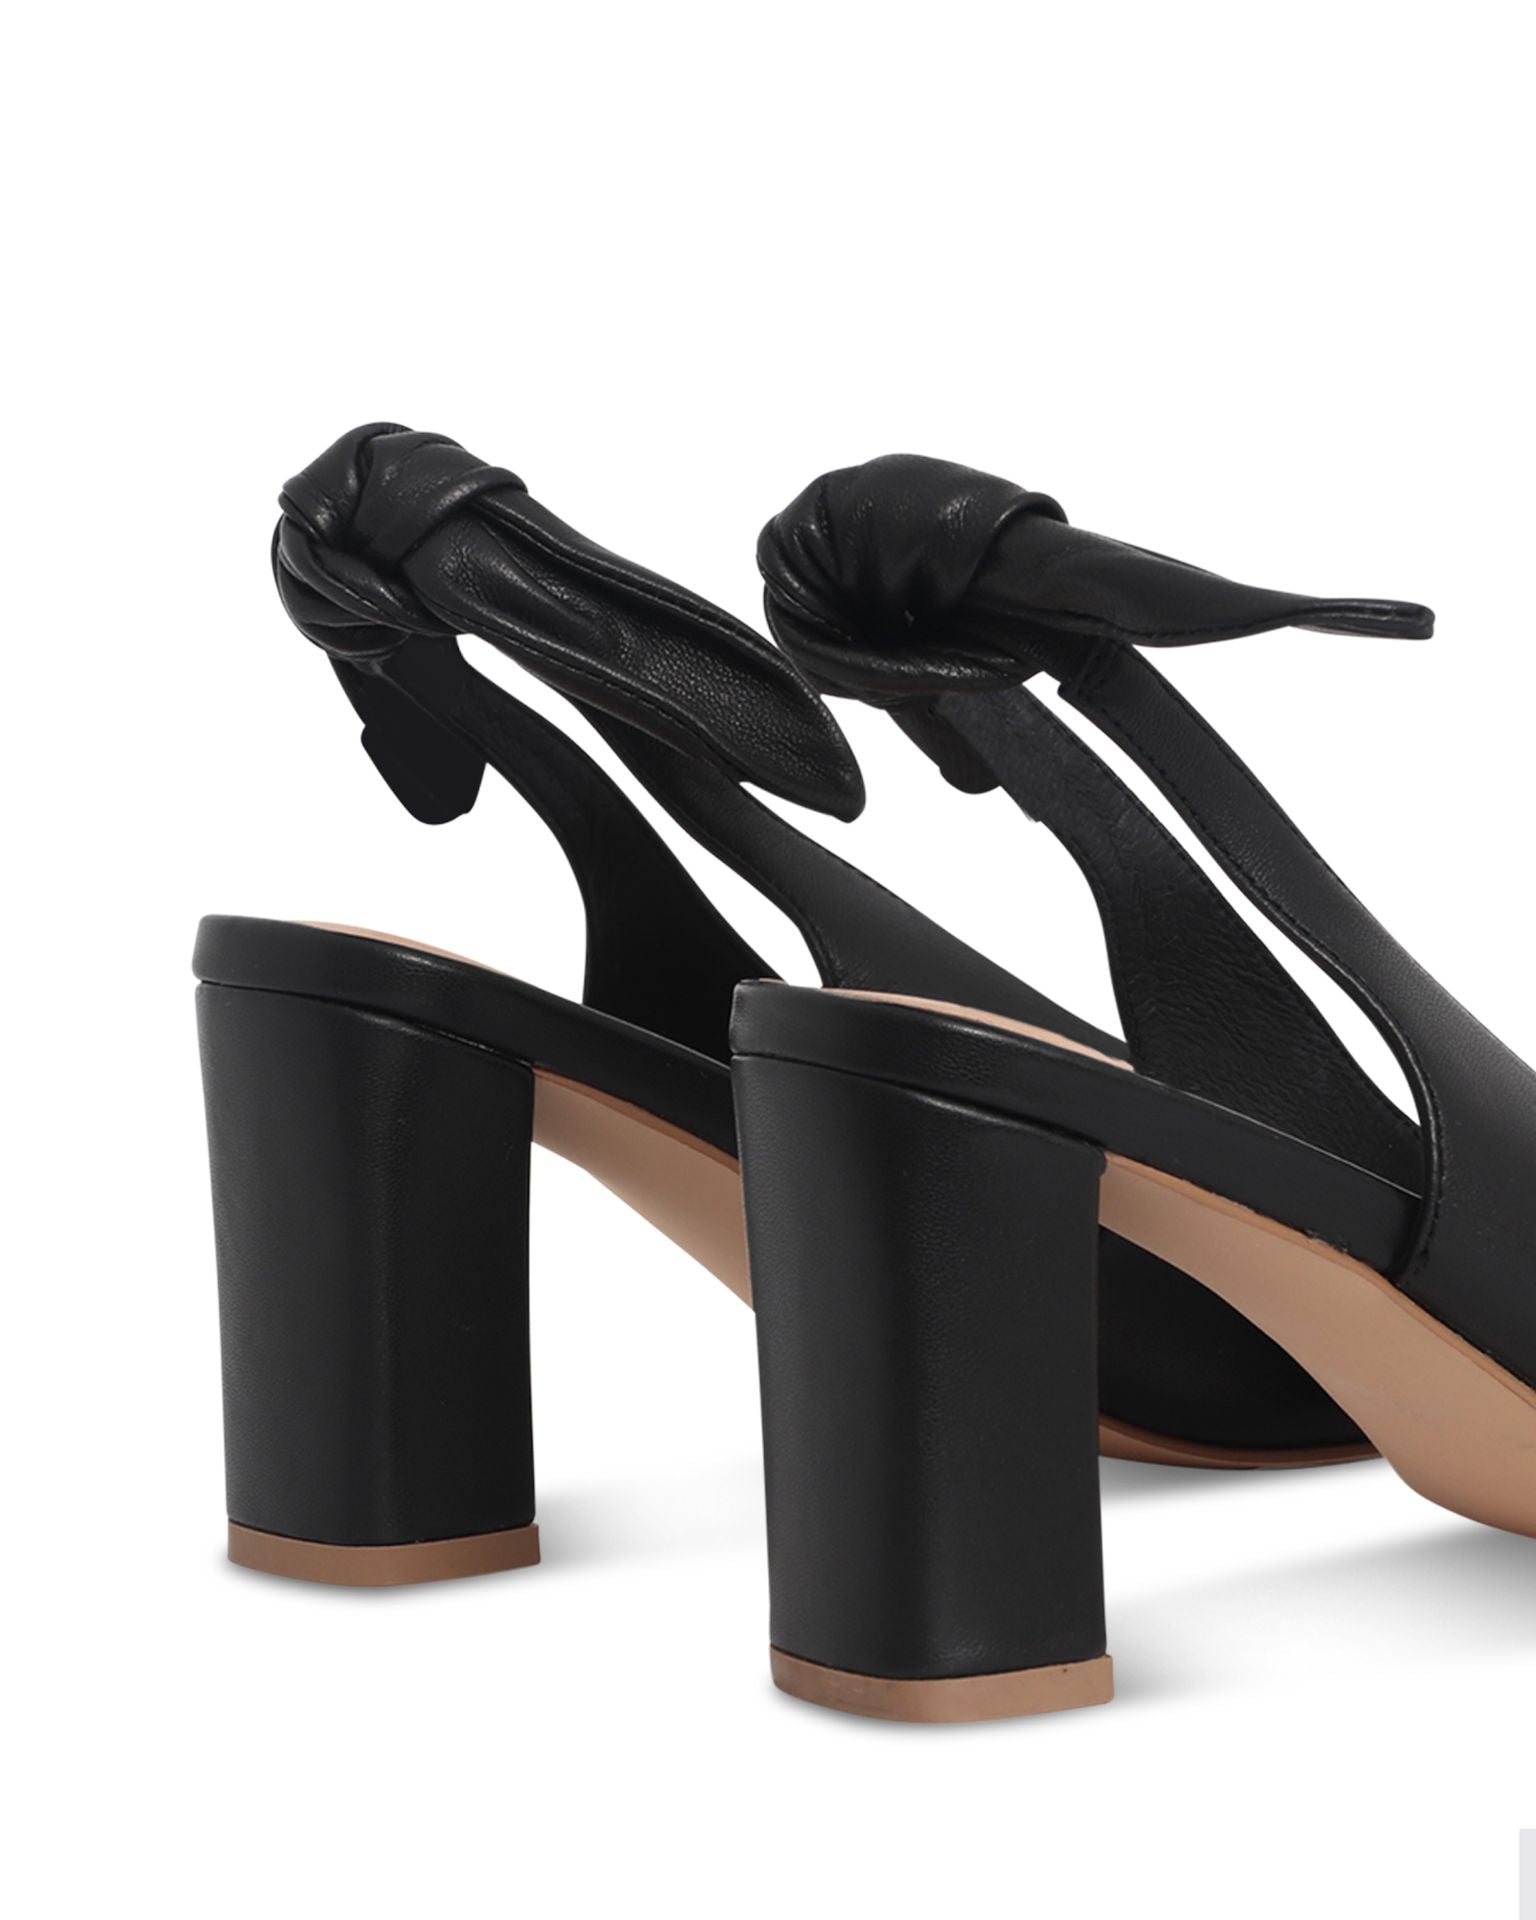 PIPER BLOCK HEEL - NUDE FOOTWEAR - BF, on sale, womens footwear - Stomp Shoes Darwin